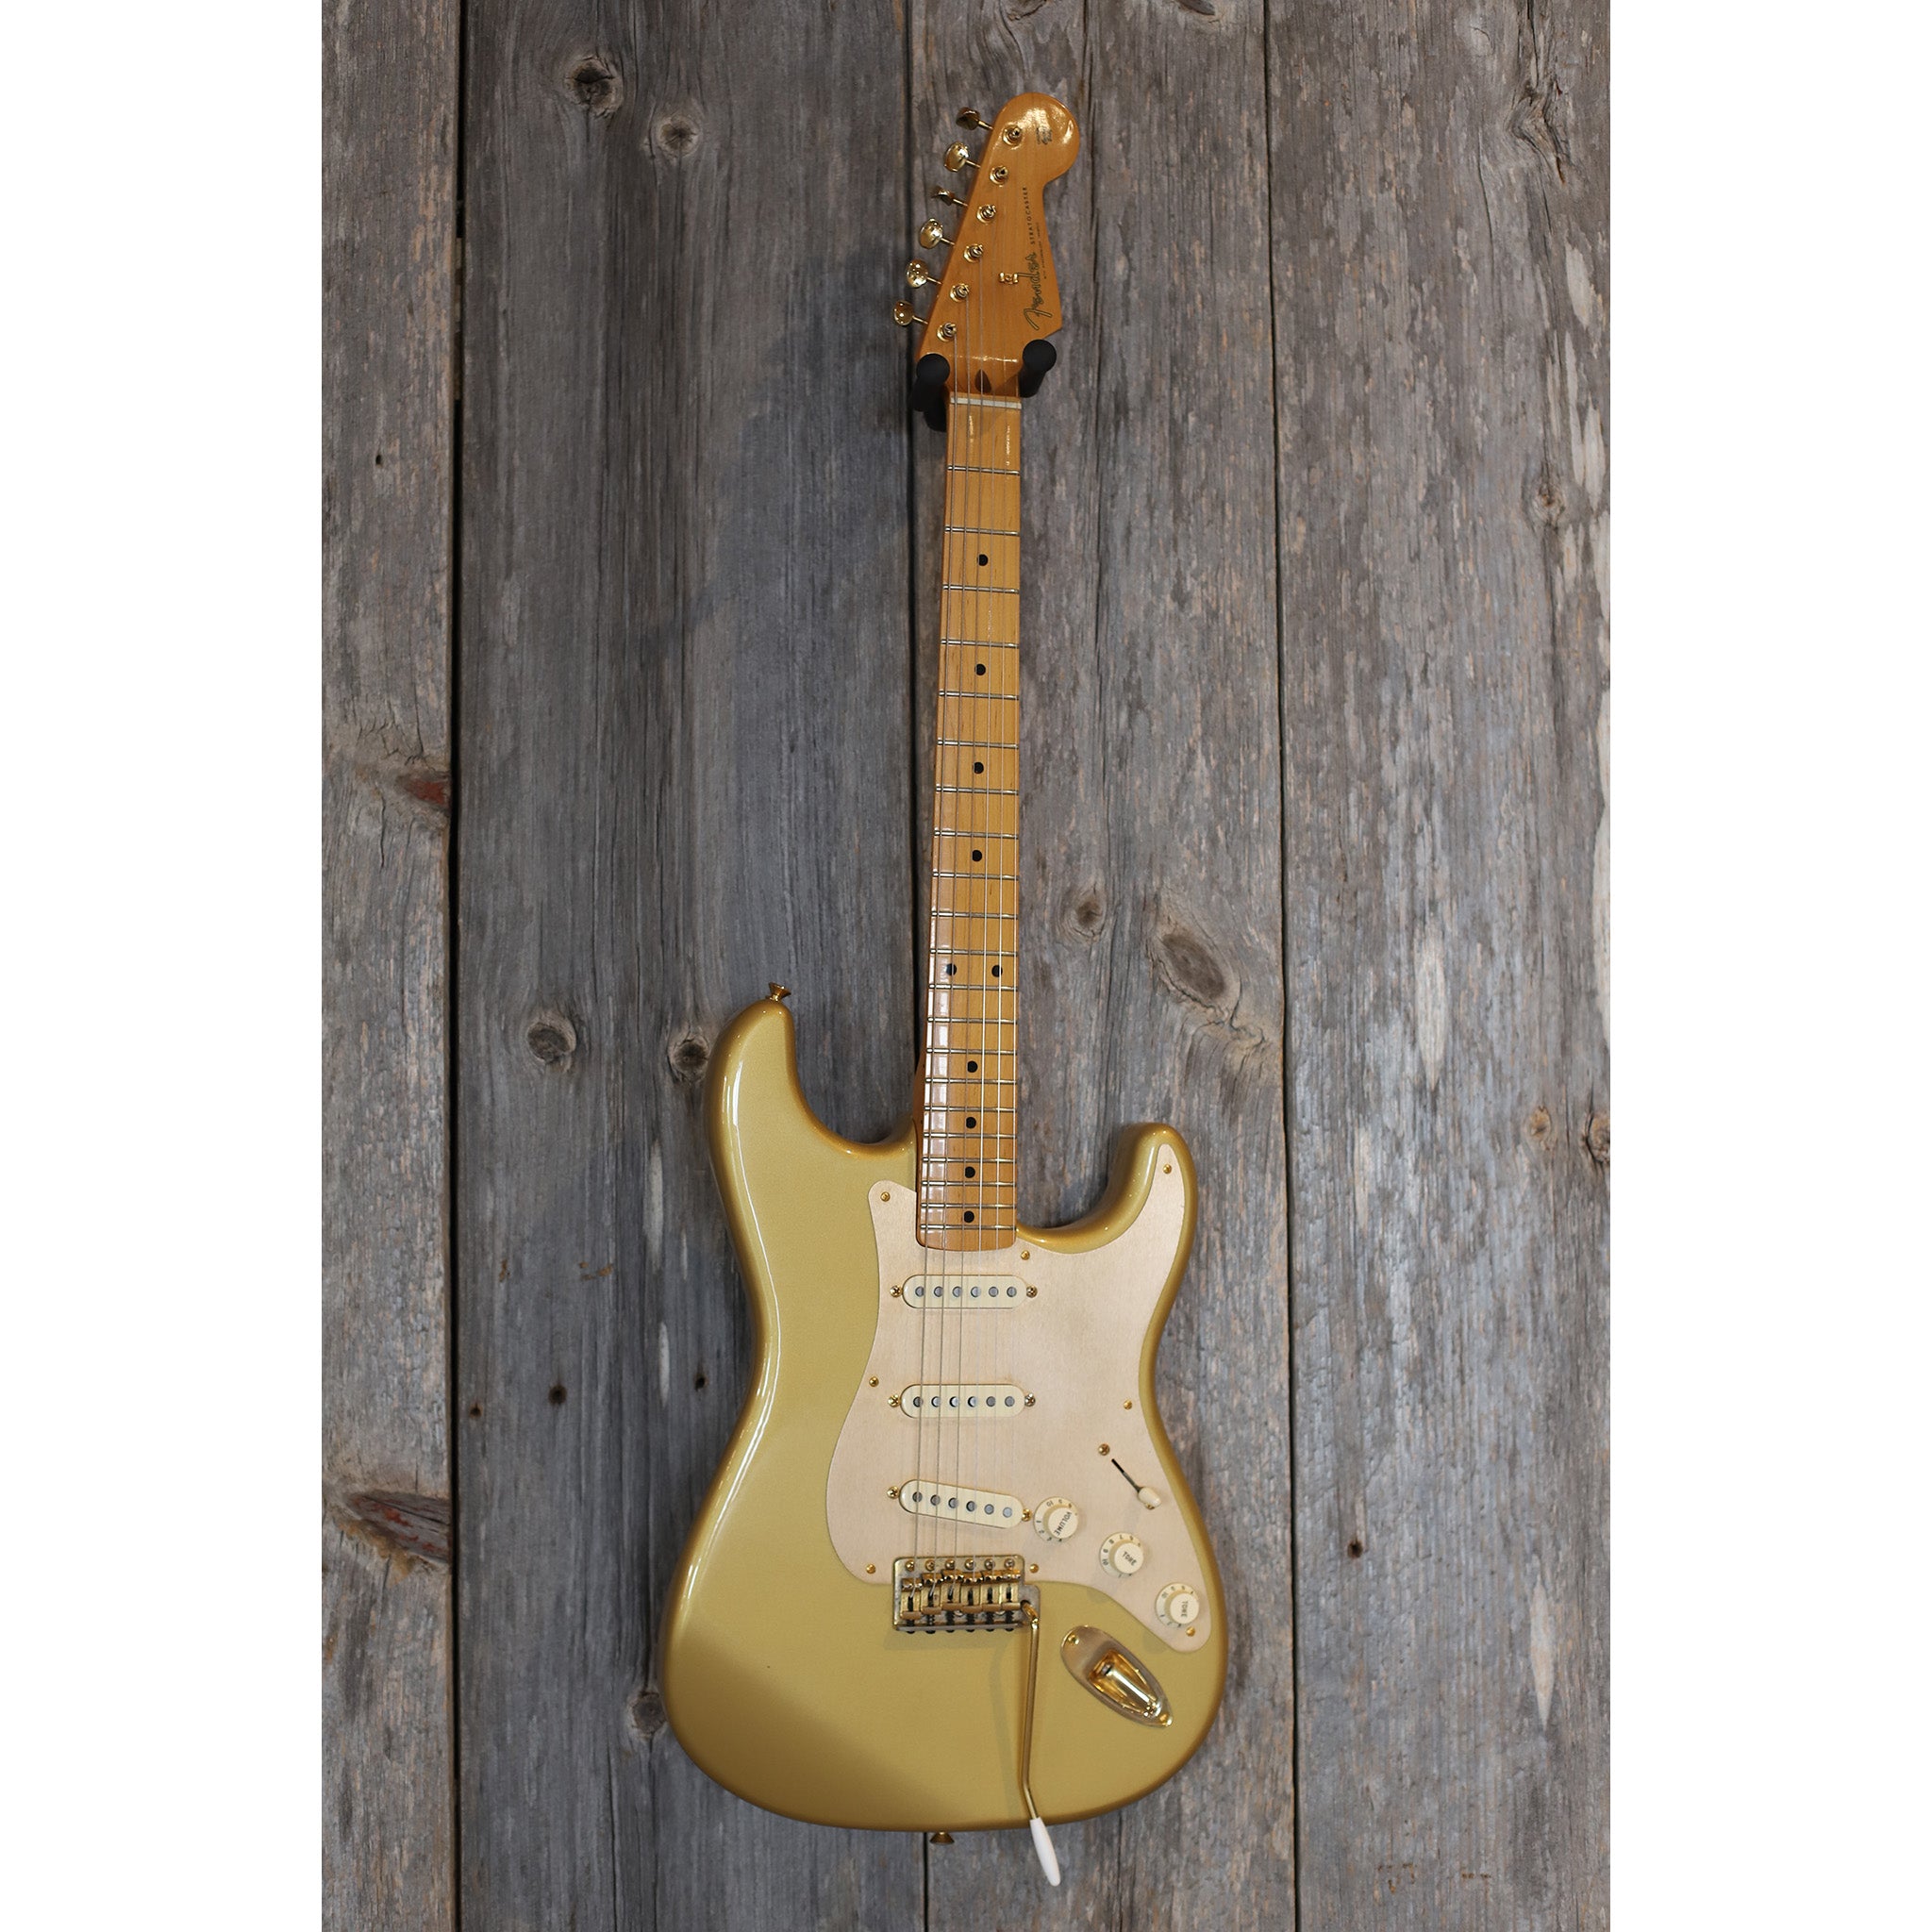 2004 Fender Stratocaster MIM 